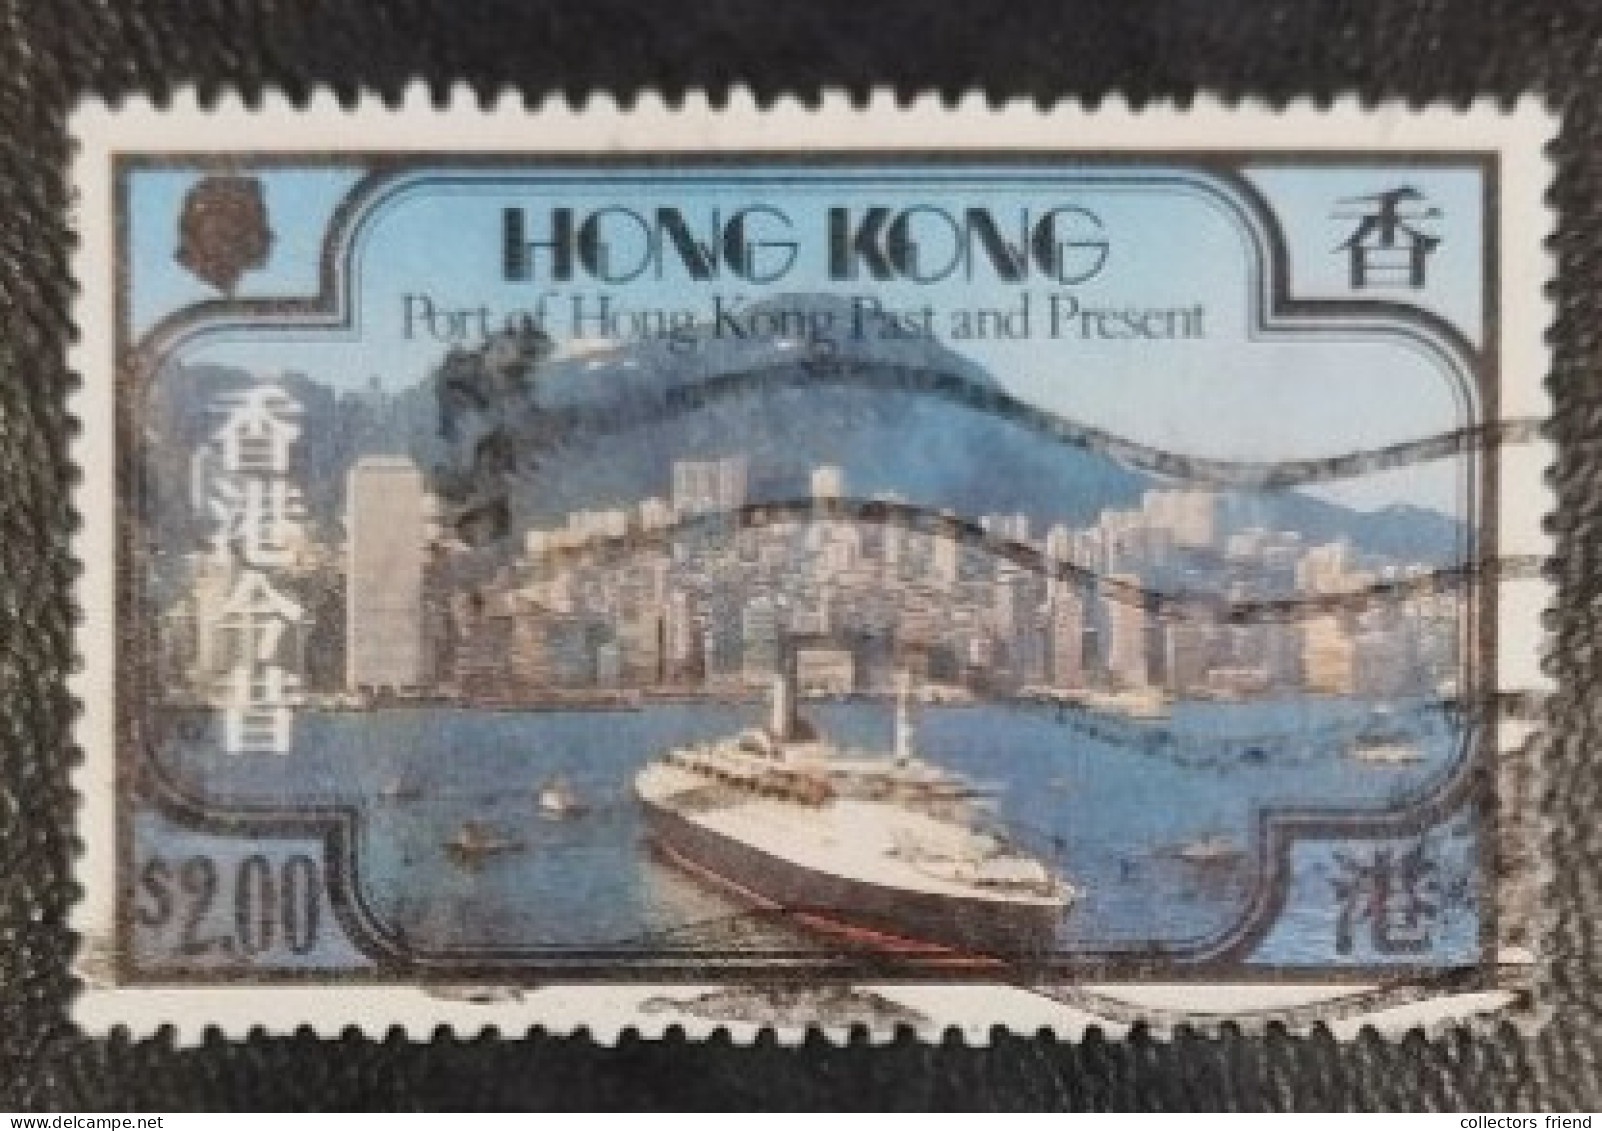 Hong Kong - 1982 - Hong Kong Port, Past And Present - Liner Queen Elizabeth 2 - Used - Usados